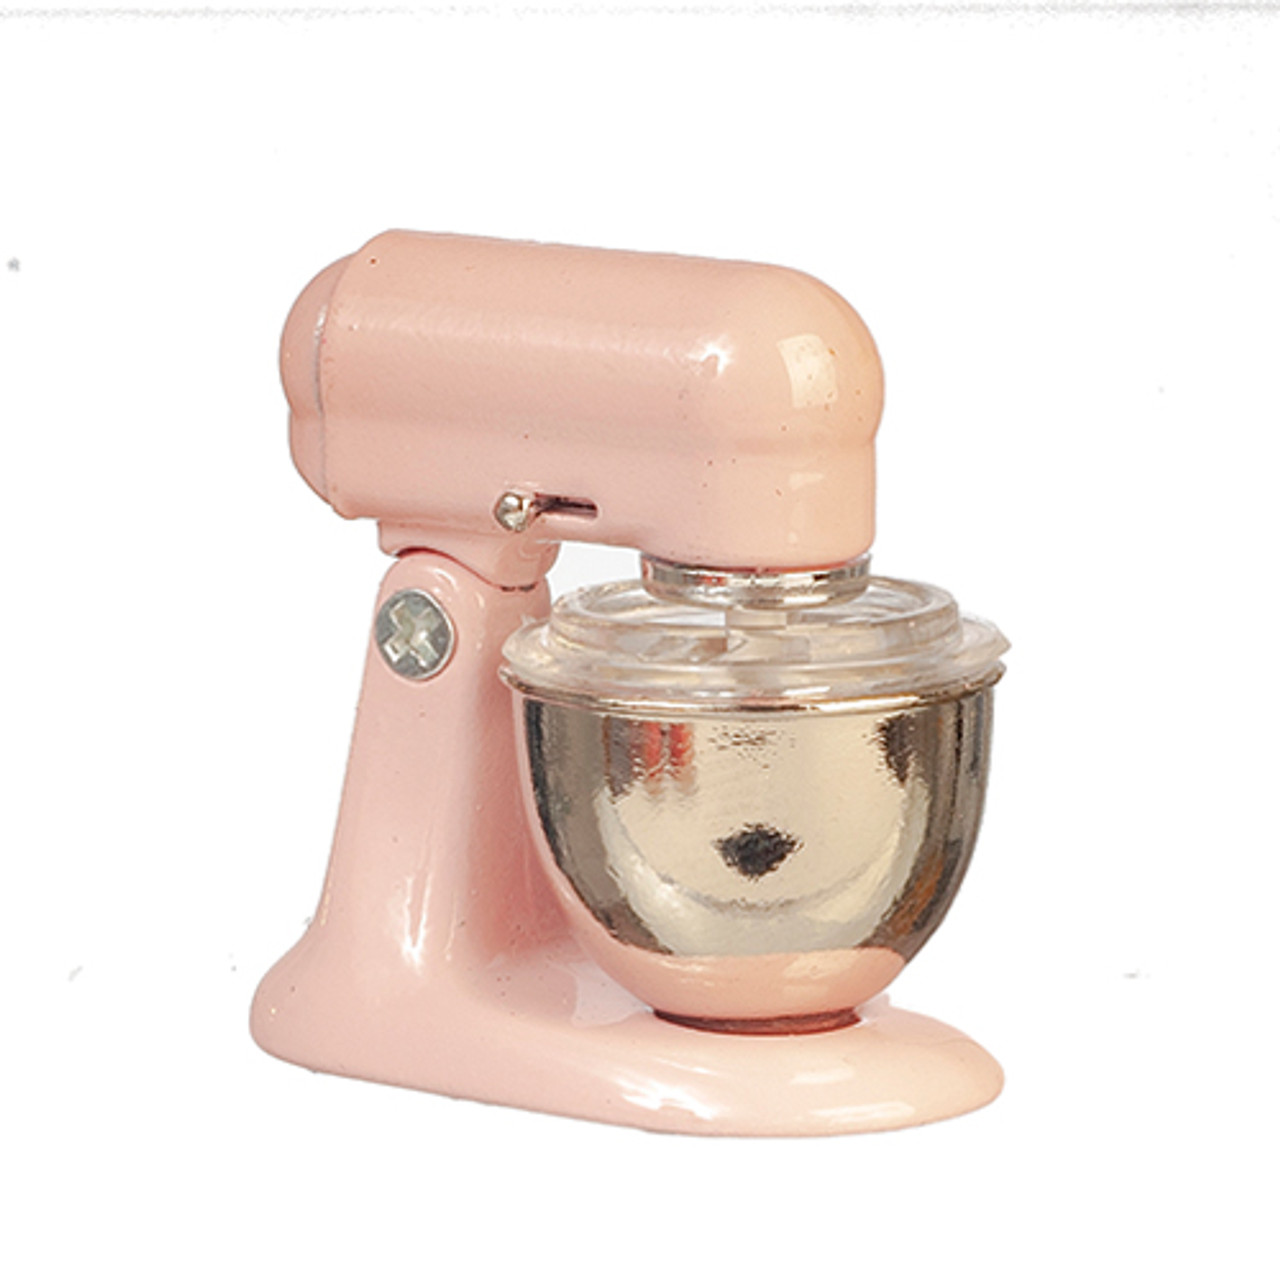 Melody Jane Dollhouse Food Mixer Pink Modern Miniature Kitchen Accessory 1:12 Scale